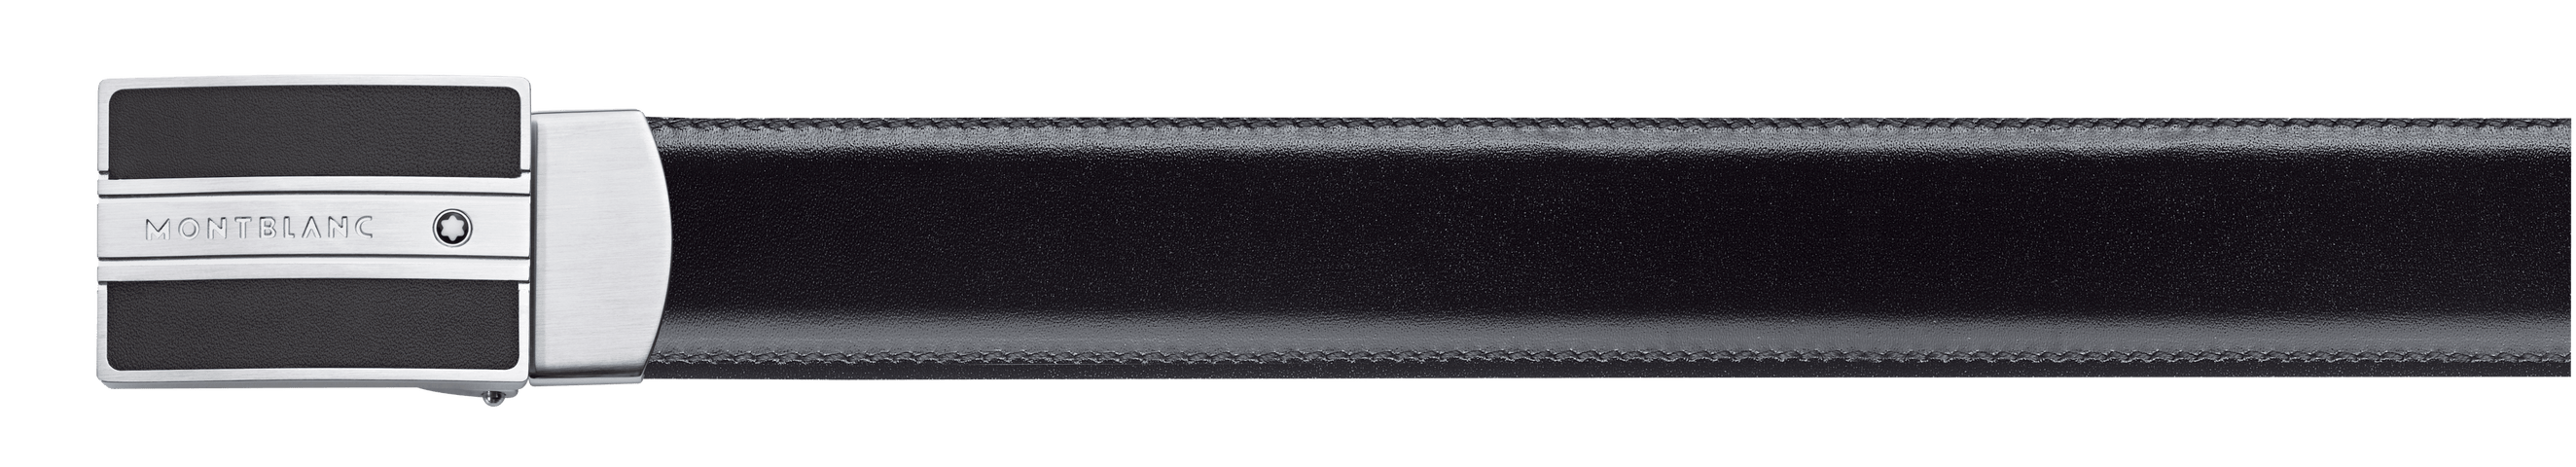 Montblanc Belt 30mm Reversible Black/Brown Leather